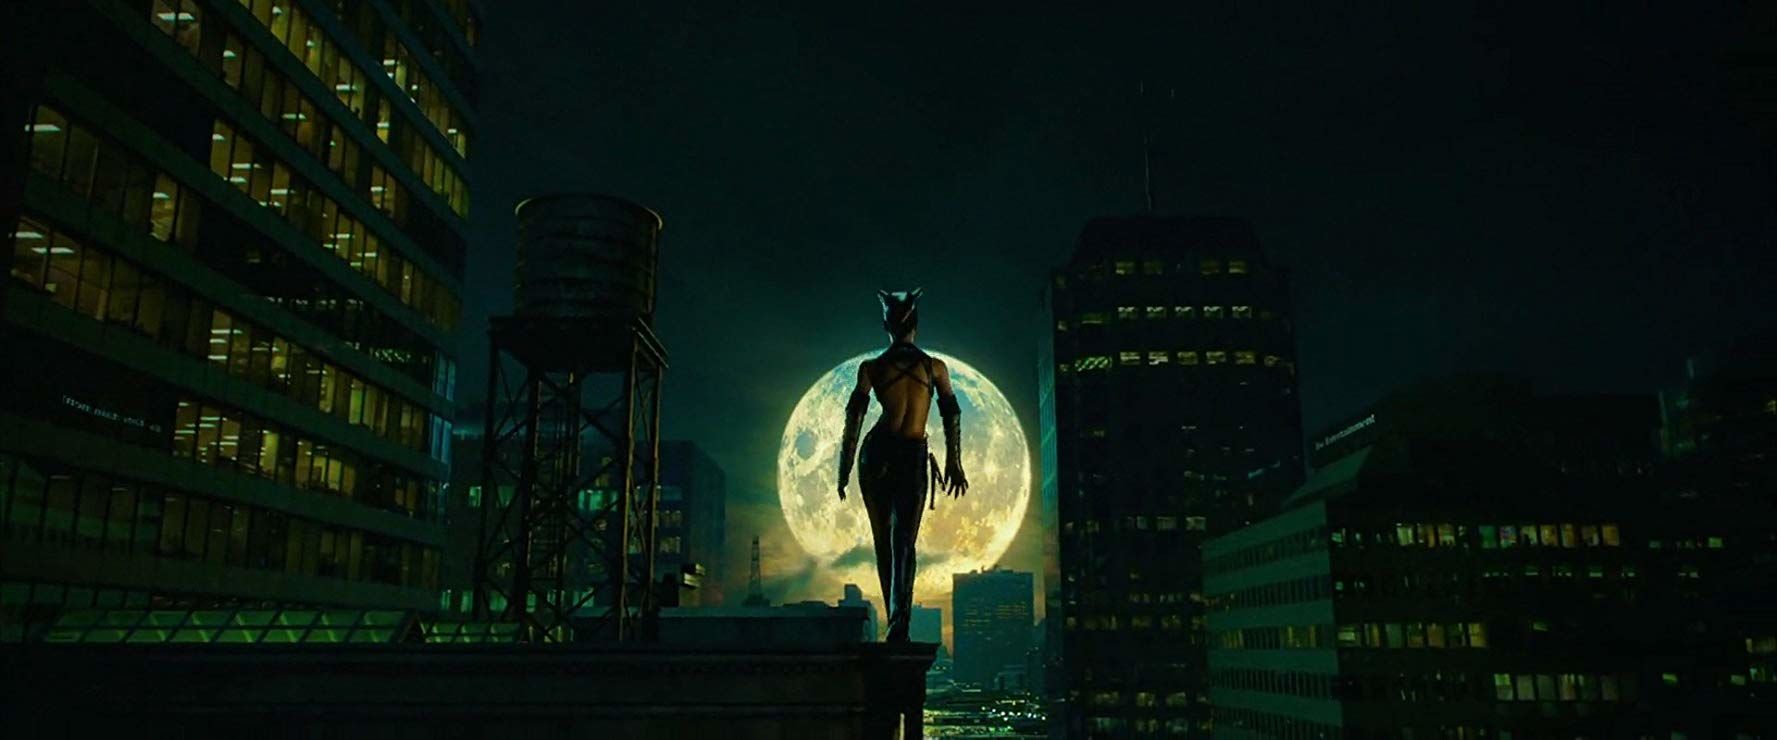 Catwoman imdb